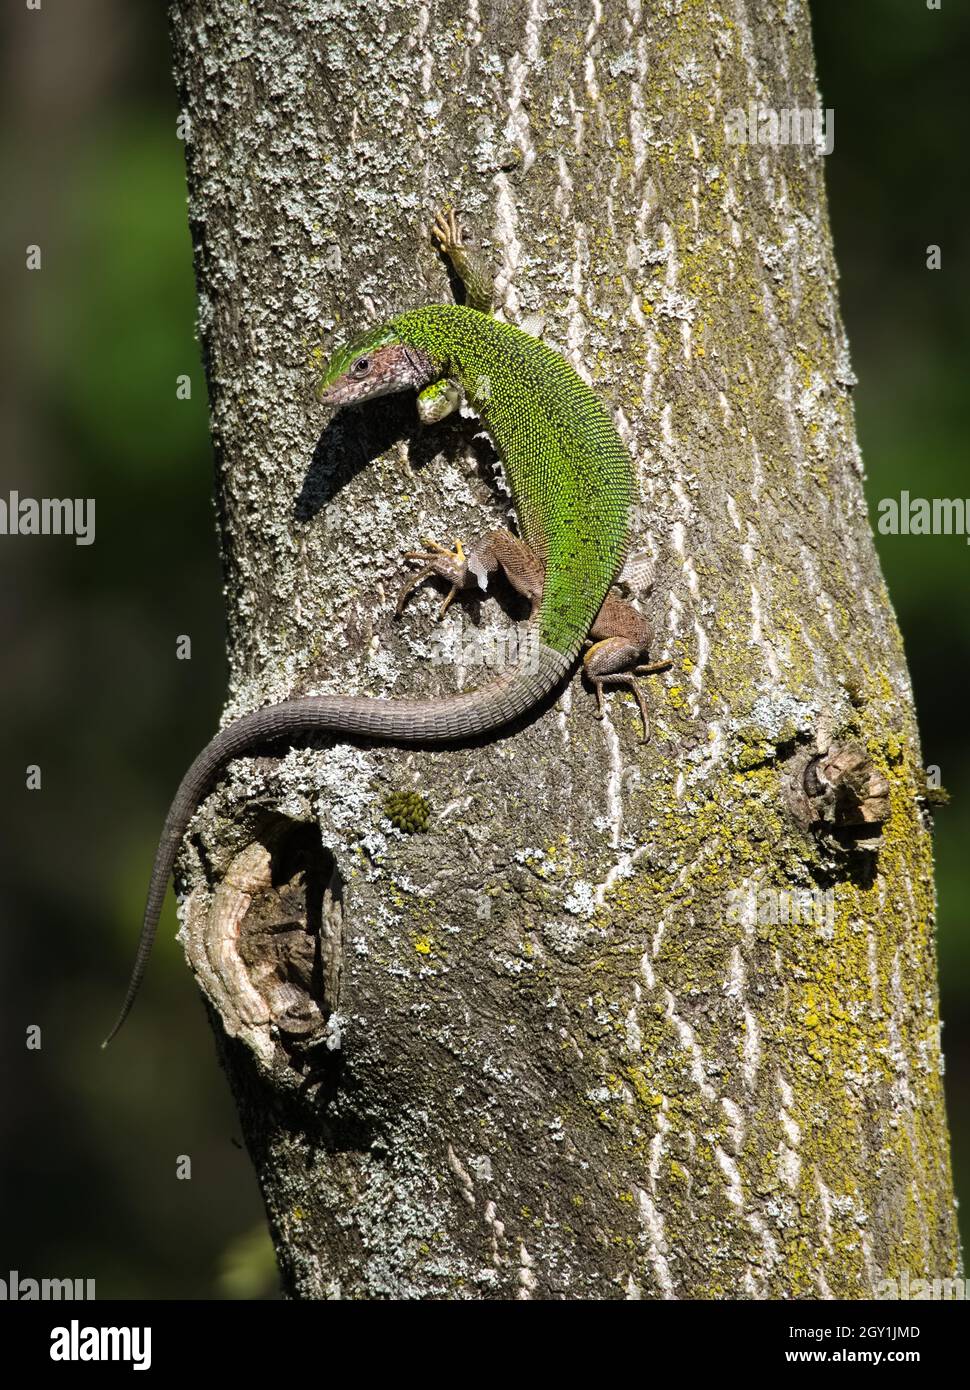 European Green Lizard Female on a Tree Trunk Stock Photo